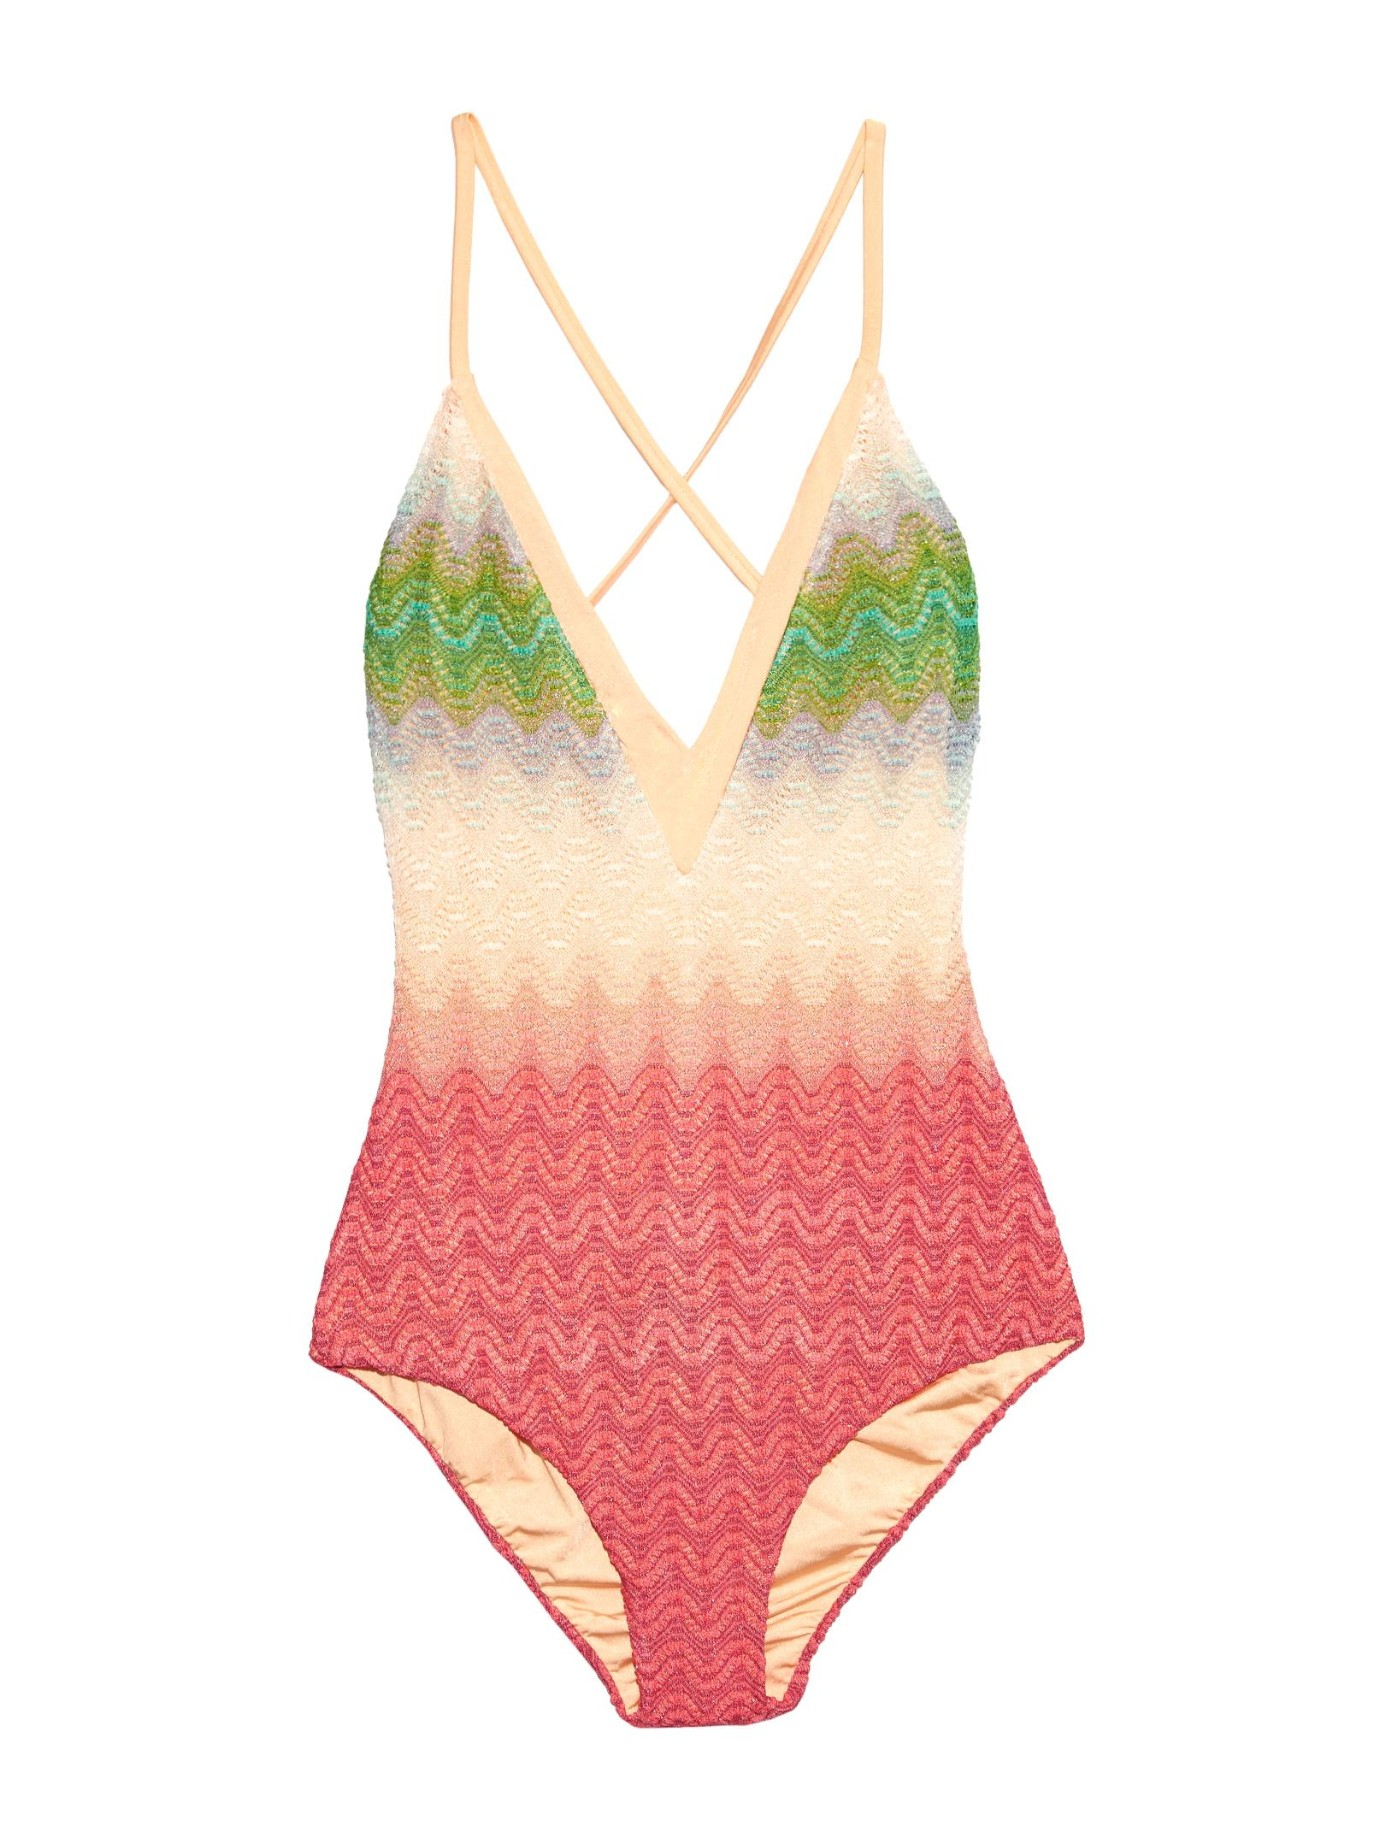 Missoni Chevron-Knit Swimsuit in Pink - Lyst